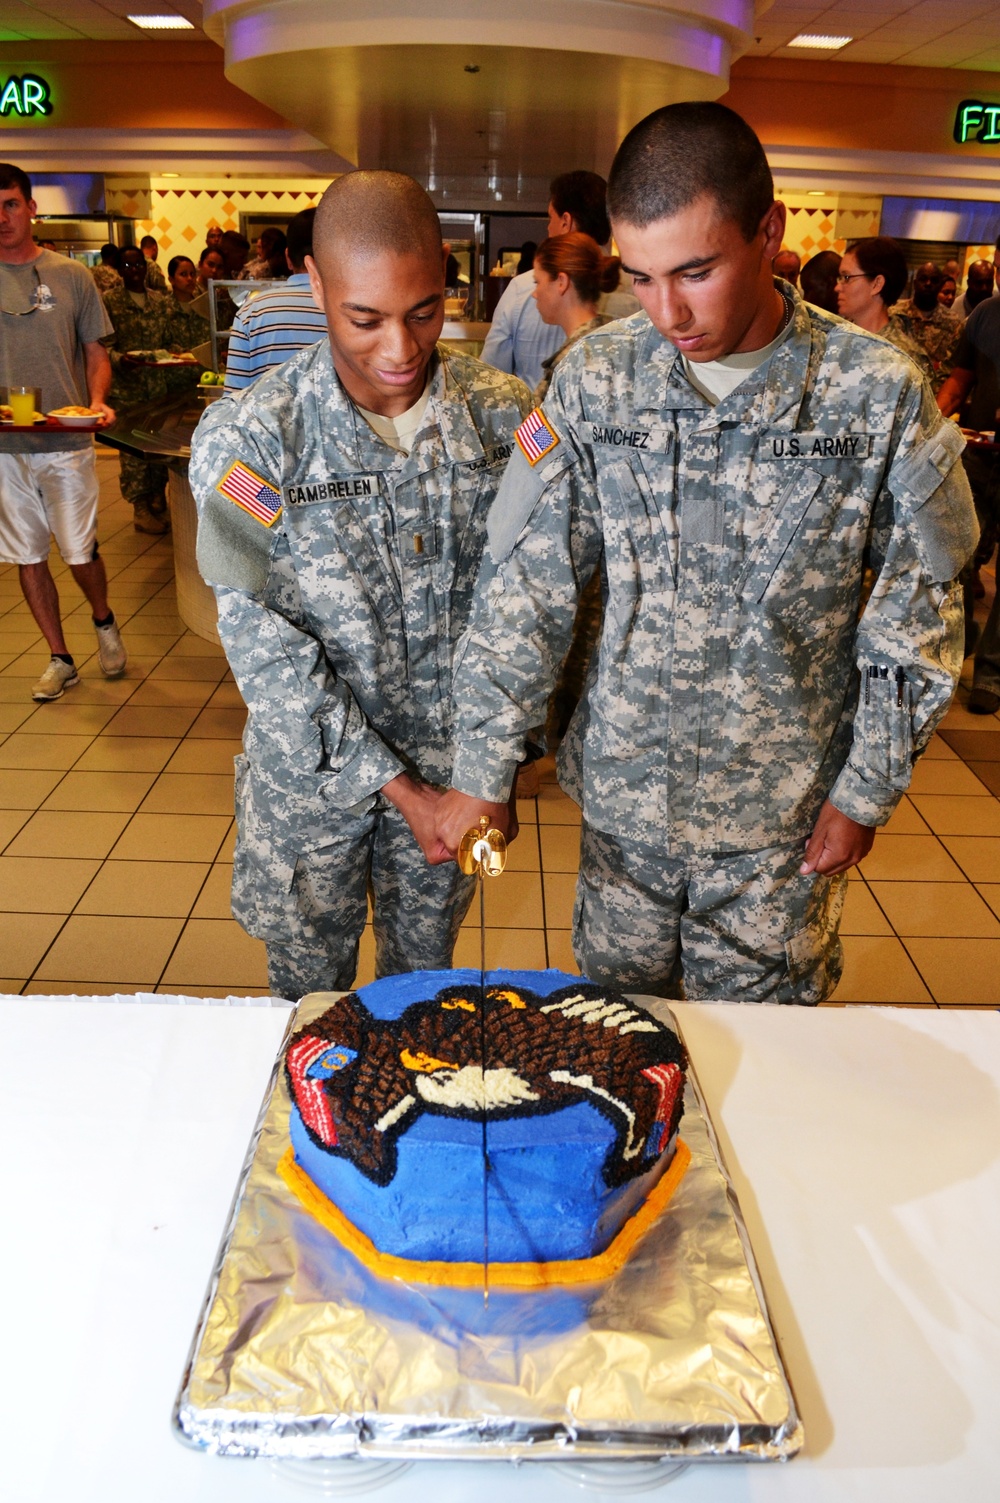 Cutting the Army birthday cake